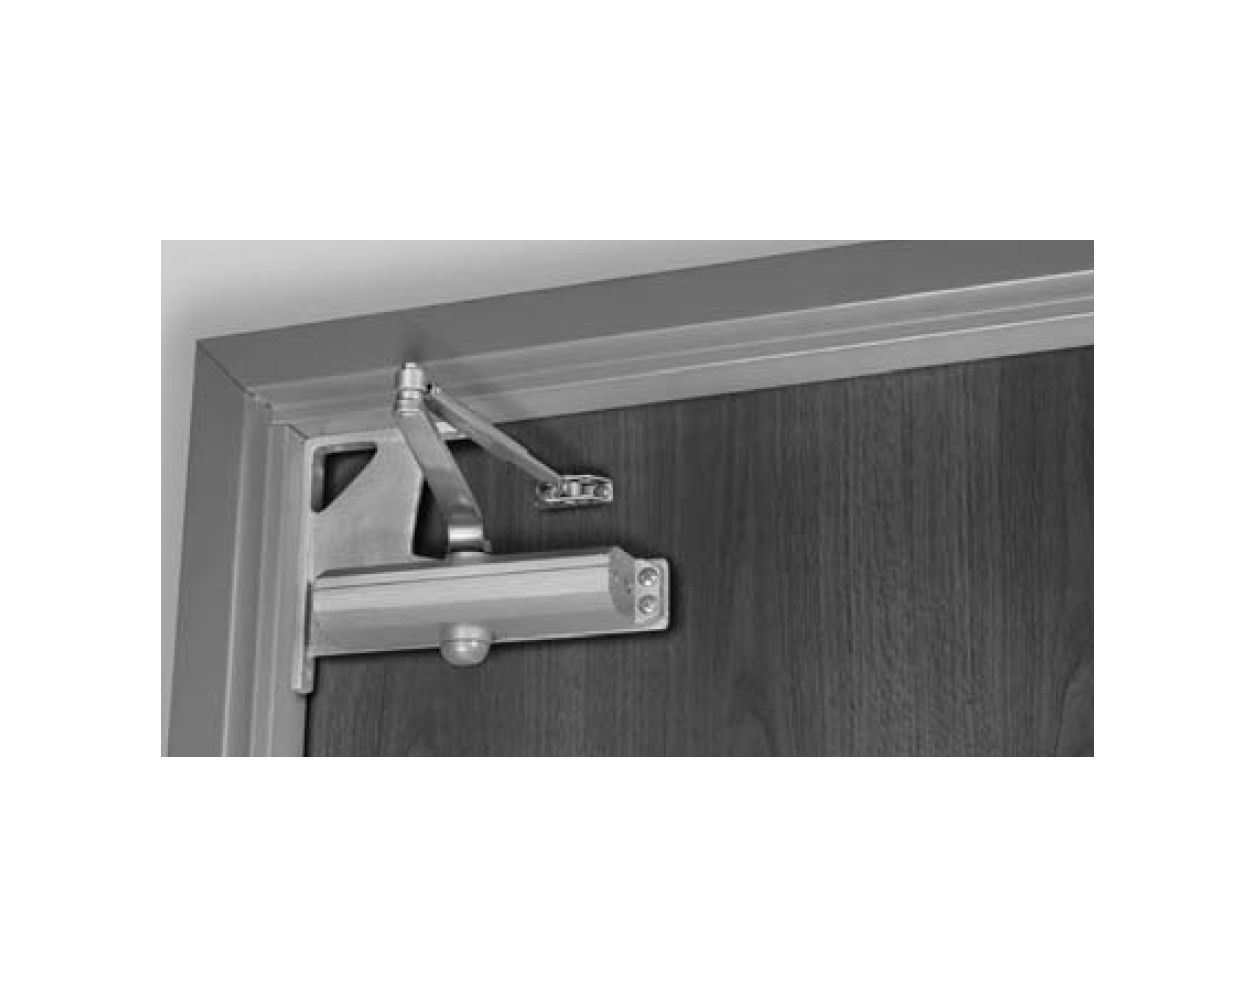 LOCKSMITH DOOR CLOSER CORNER BRACKET FOR NORTON 1604 AND EQUALS DURONODIC FINISH 